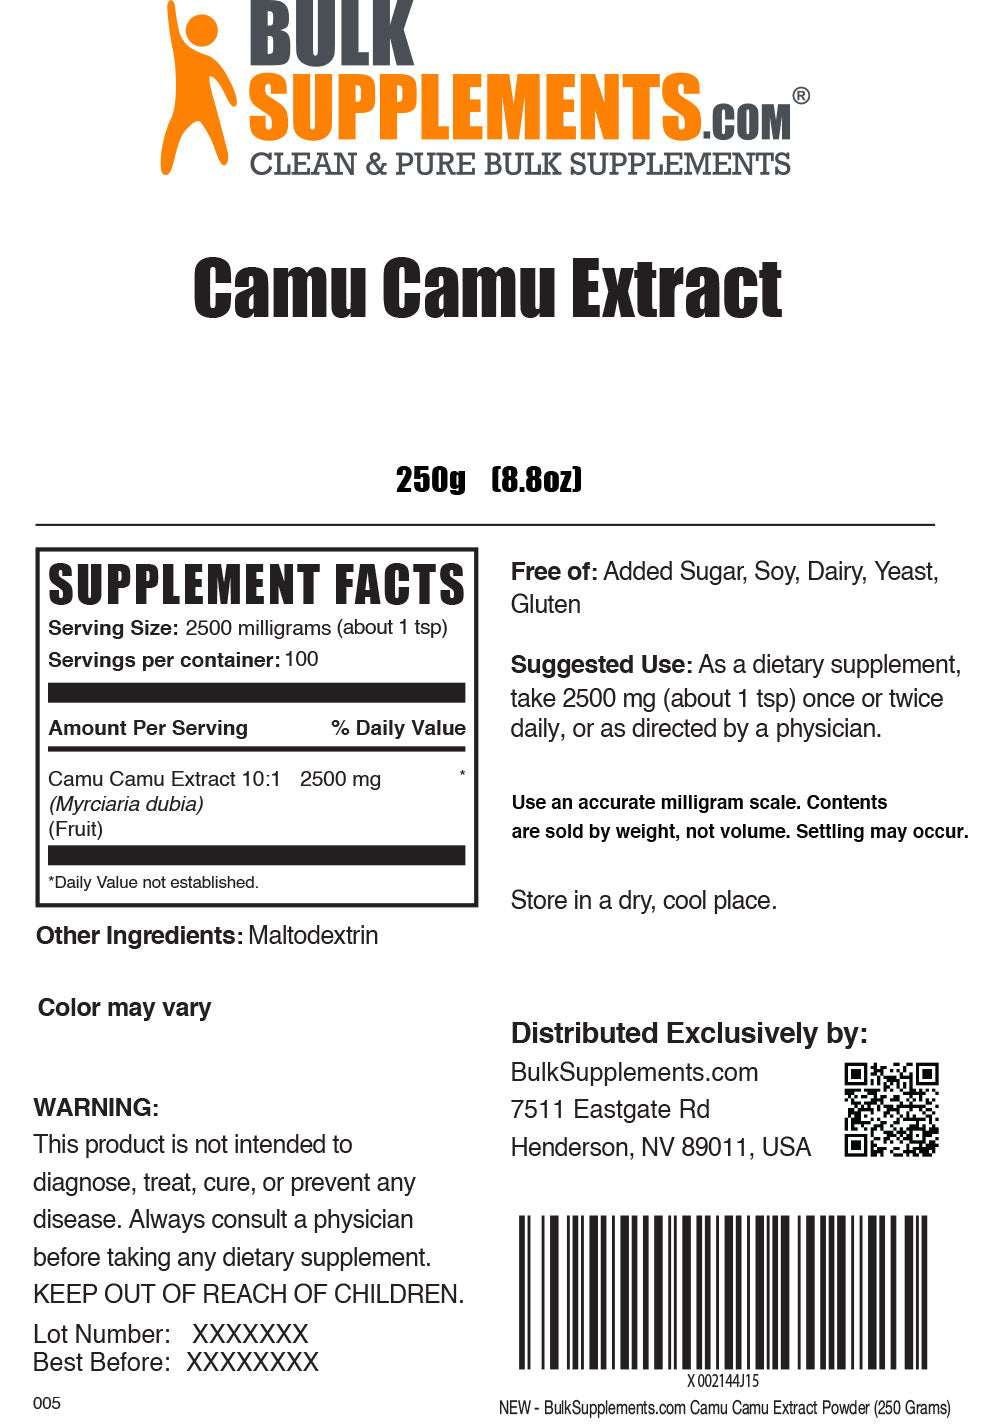 Camu Camu Extract Powder